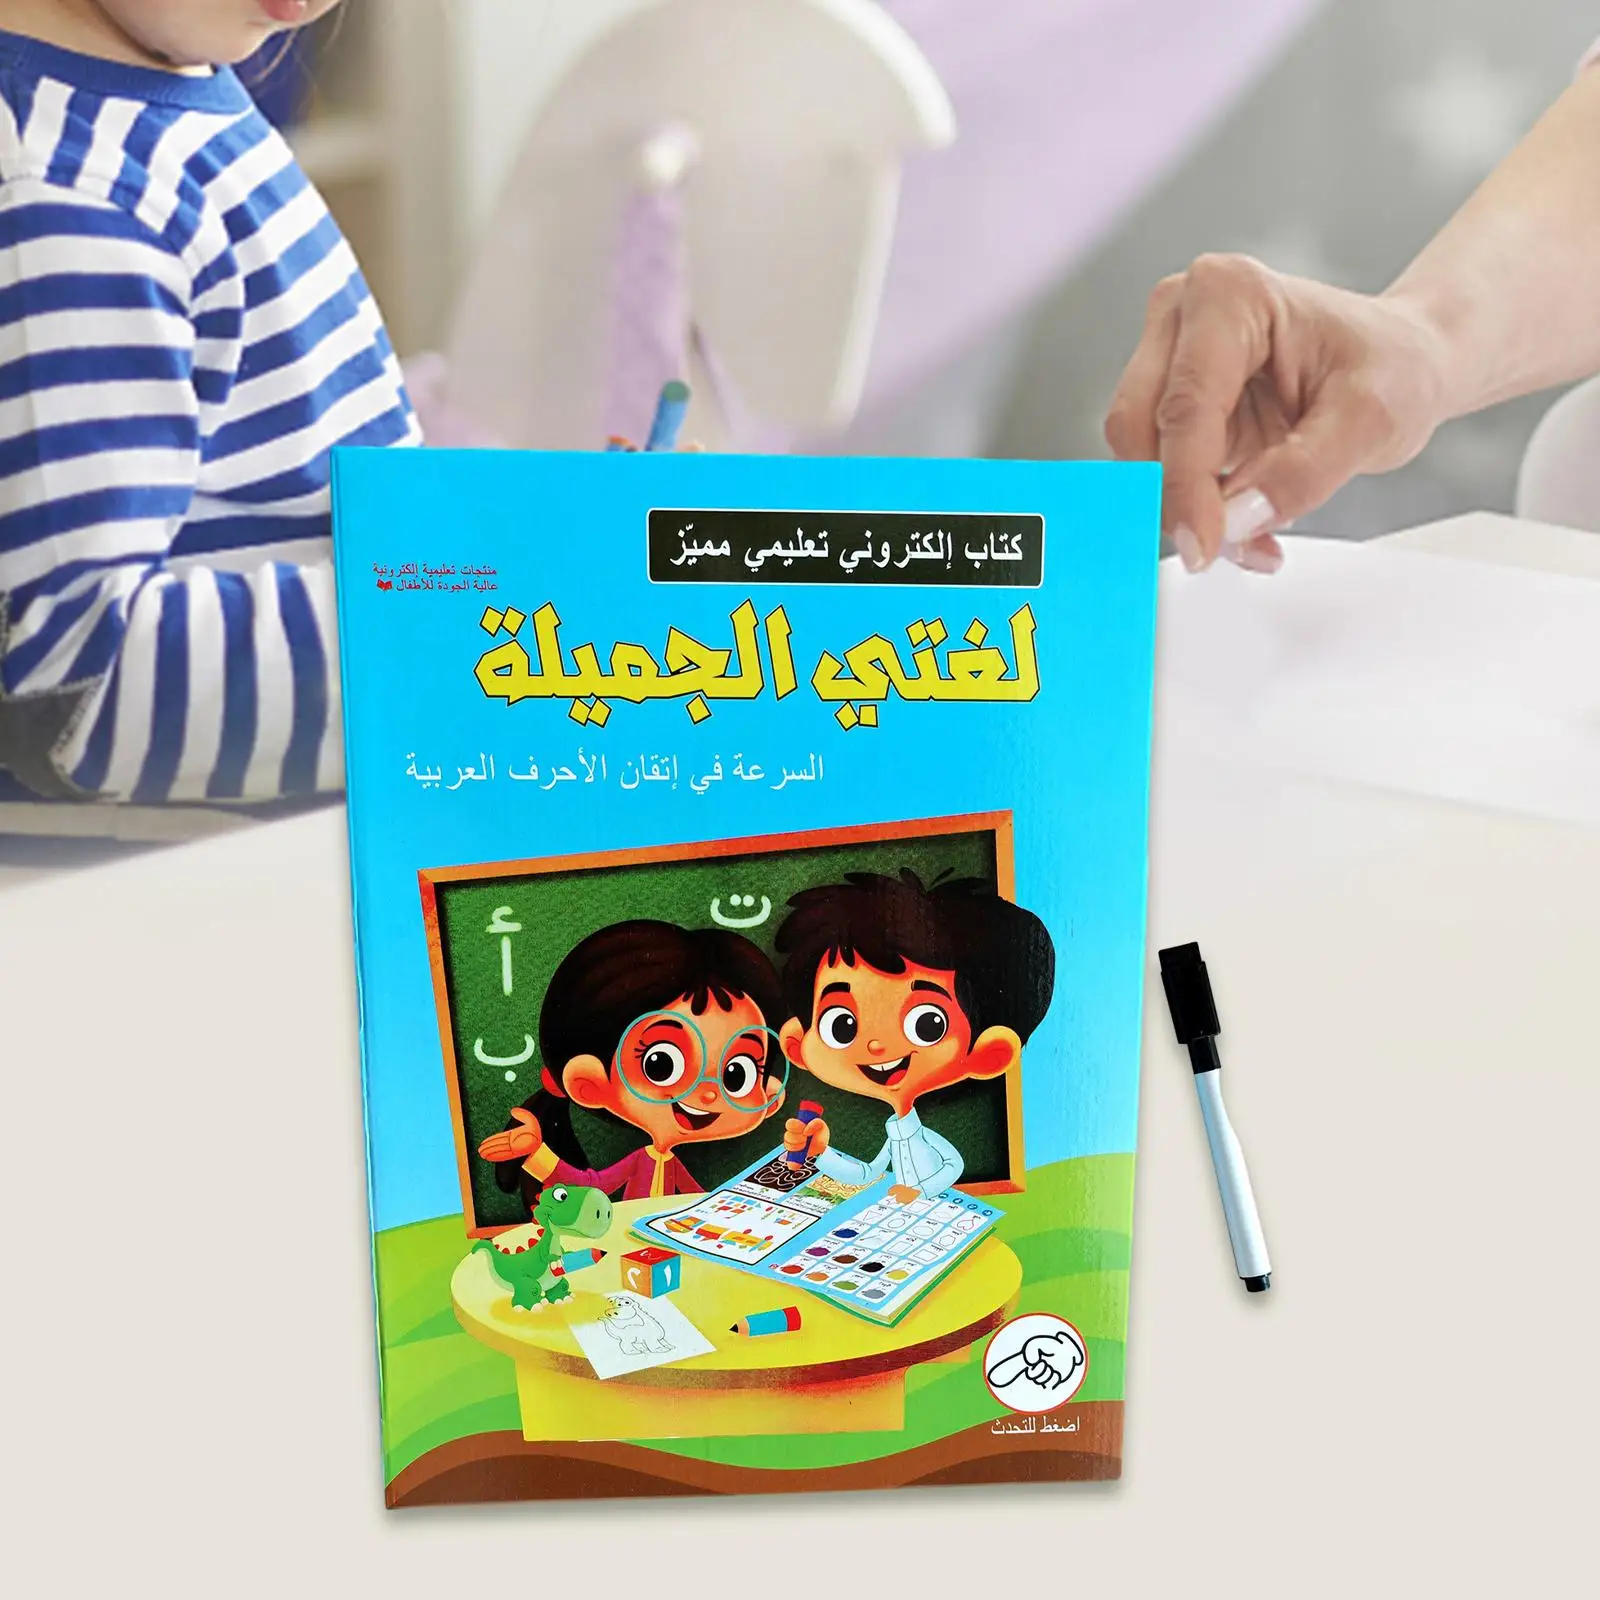 Arabic Learning Book Arabic Word Learning Developmental Toys Audio Book Teaching Aids for Kids Children Girls Boys Bithday Gifts